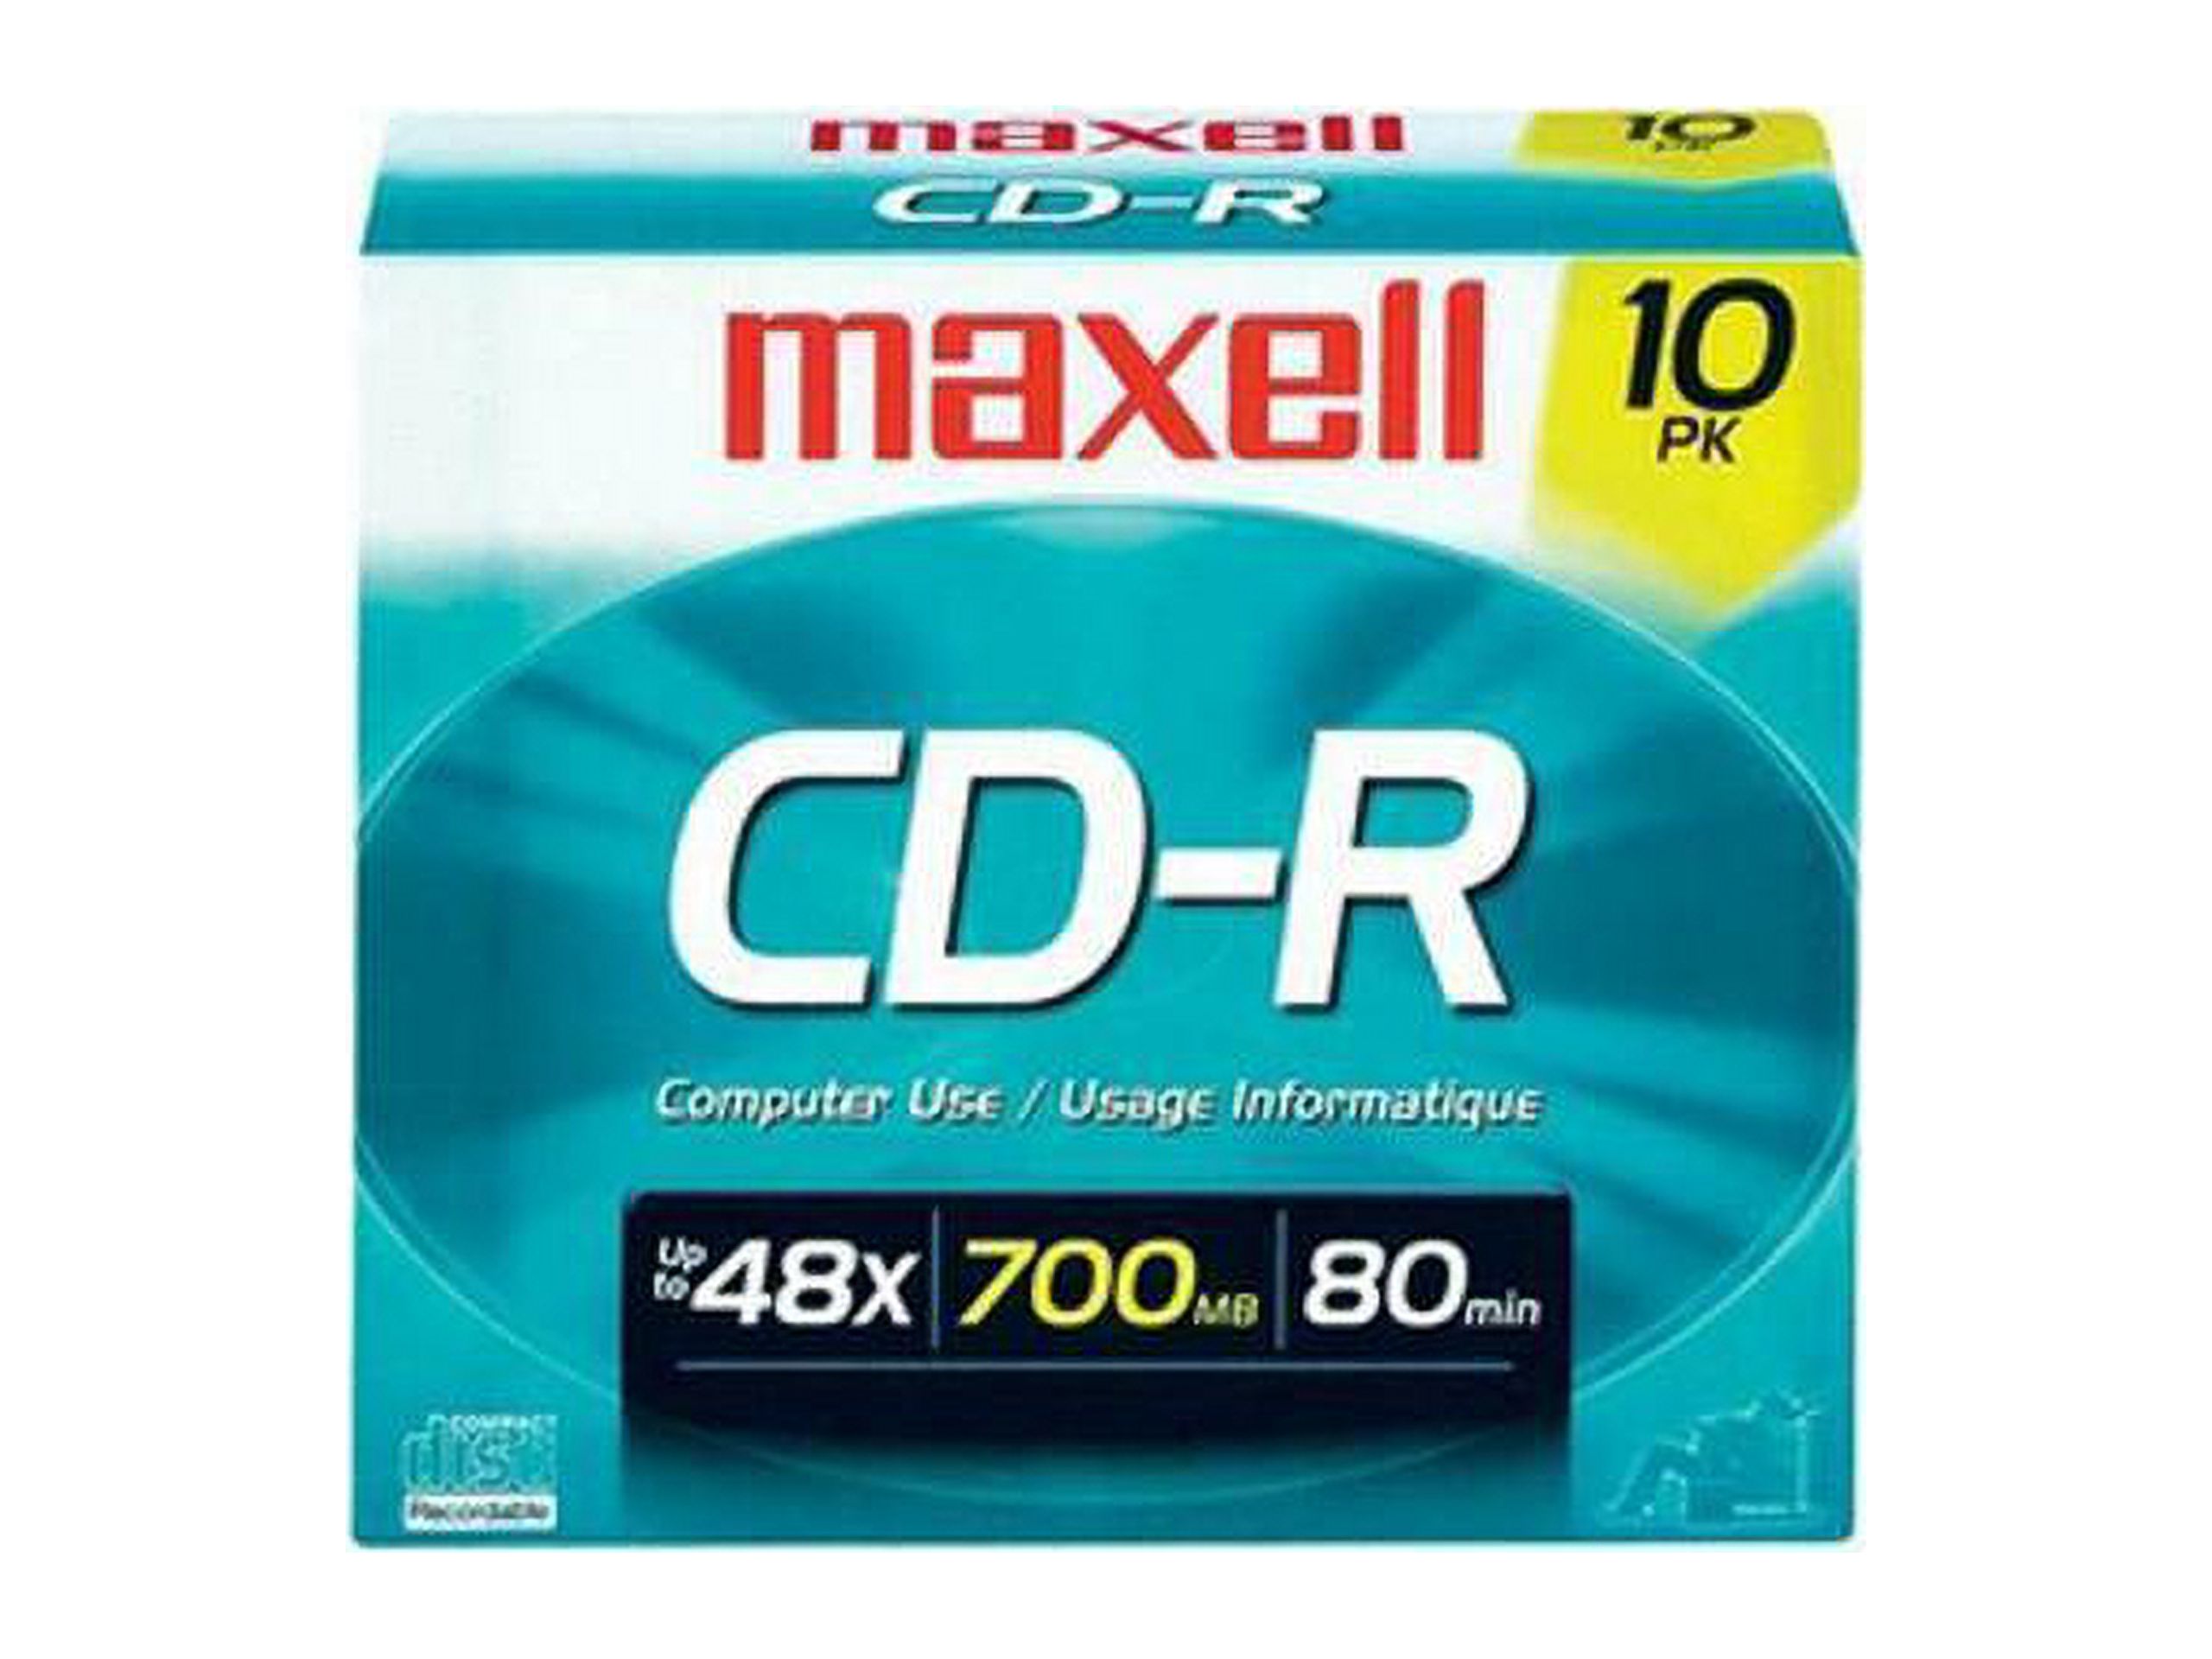 maxell 700MB 48X CD-R 10 Packs Slim Jewel Case Media Model 648210 - image 2 of 2